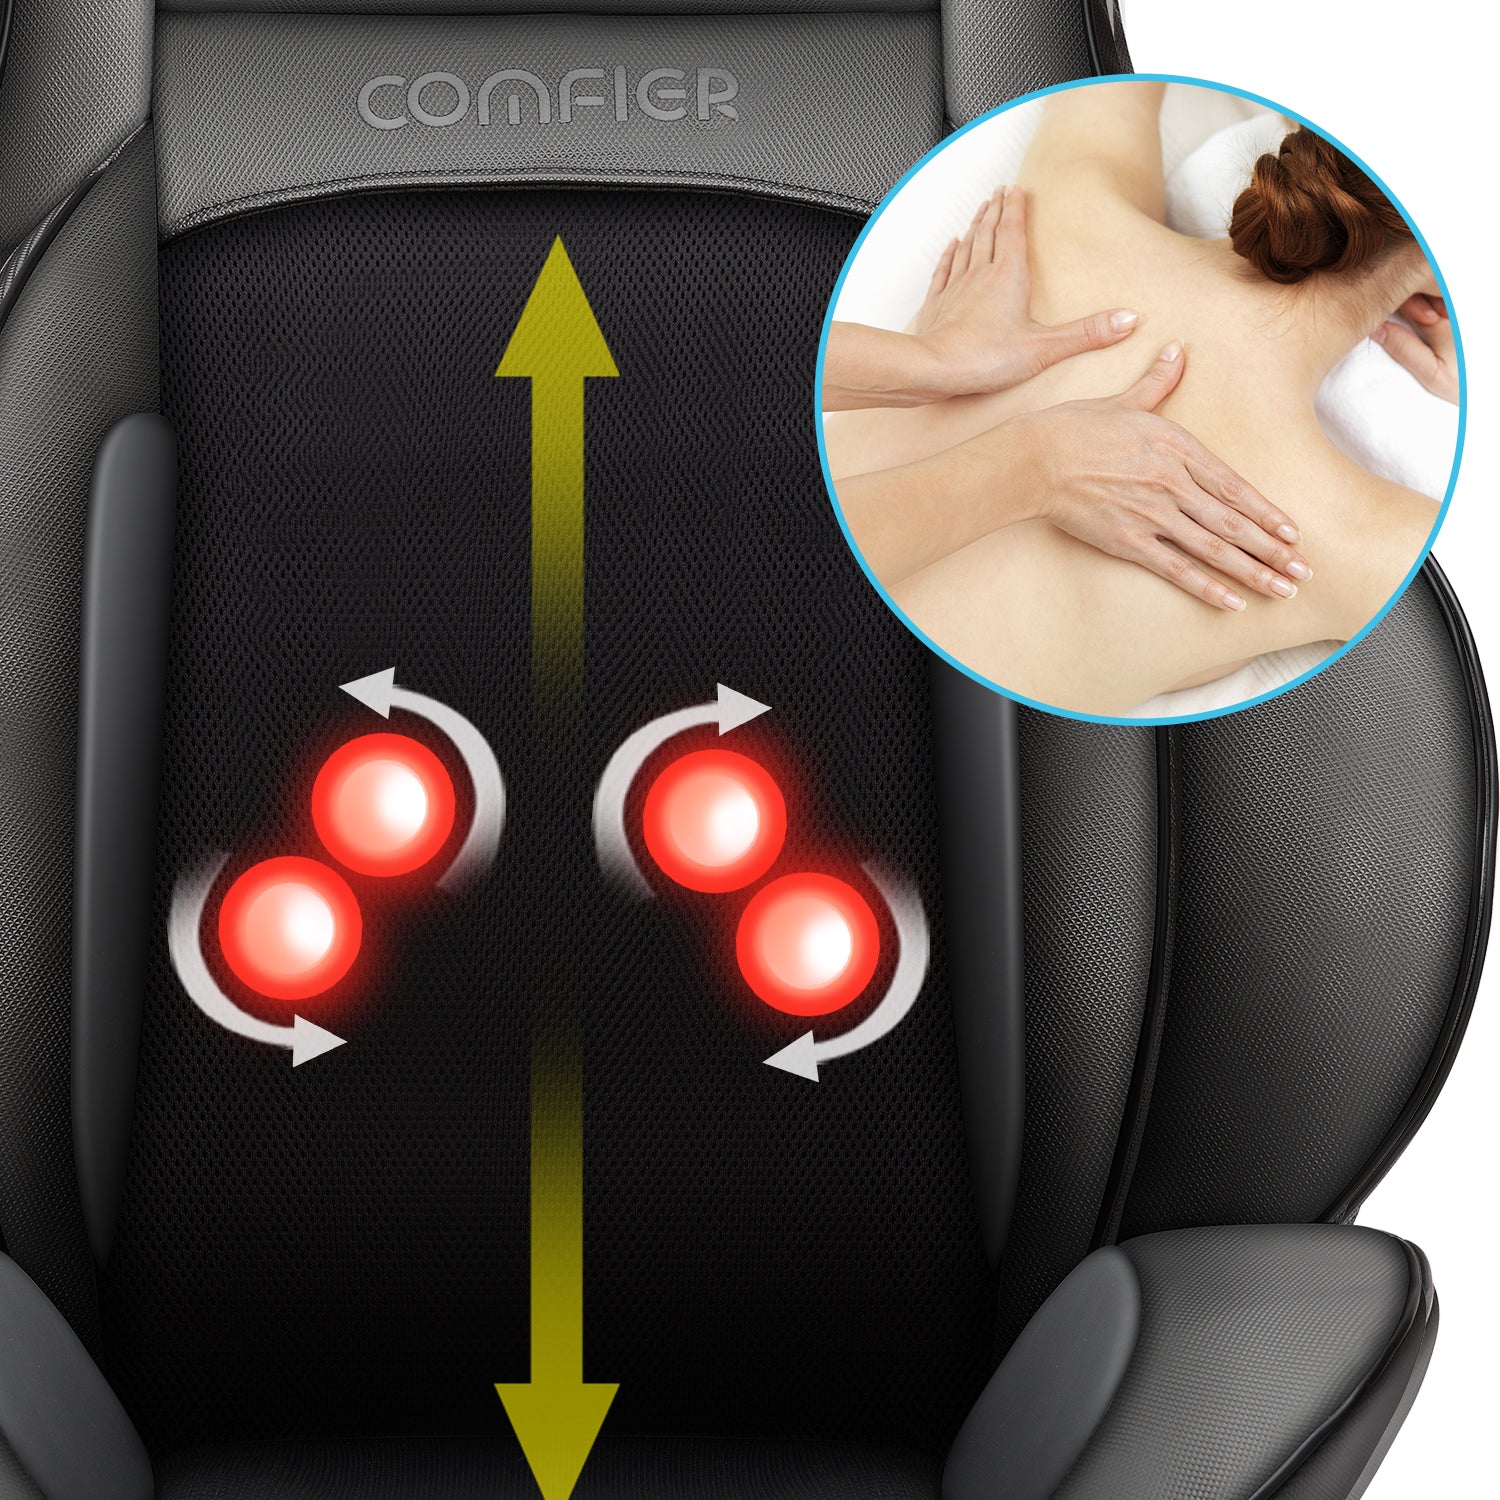 COMFIER CF-2309A Shiatsu Neck and Back Massager REVIEW 